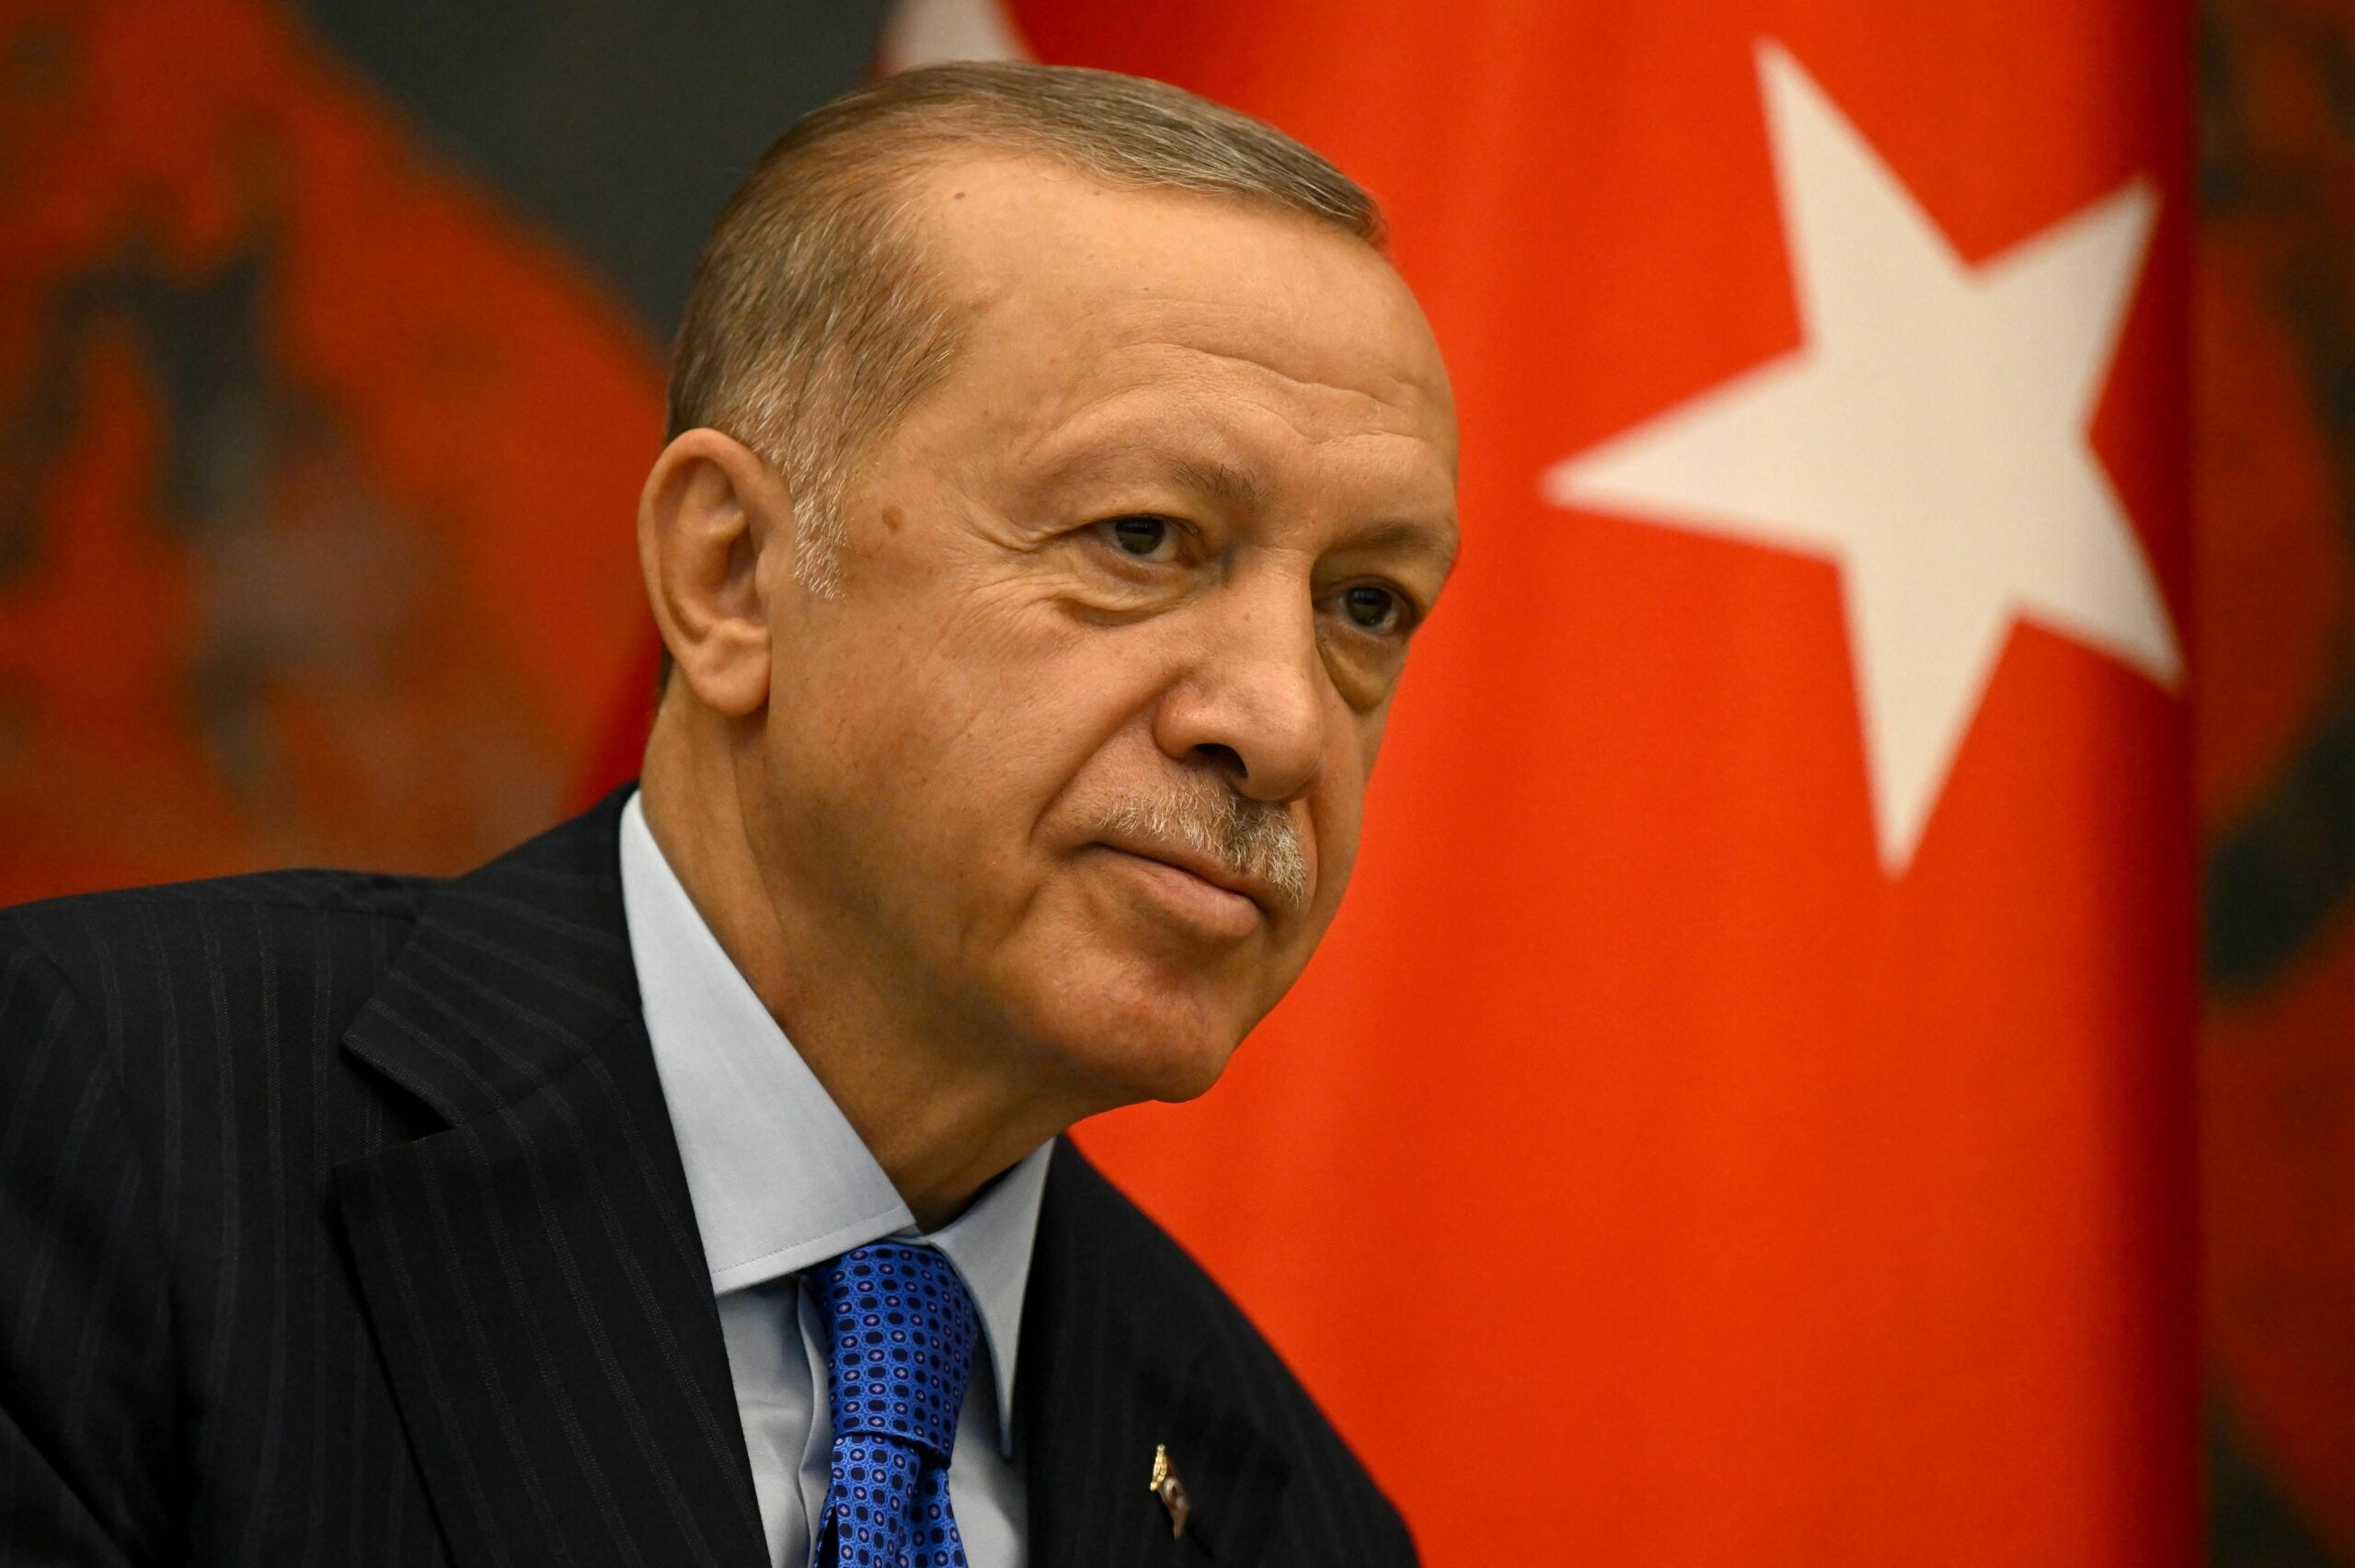 Recep Tayyip Erdoğan, Turkey's Leader